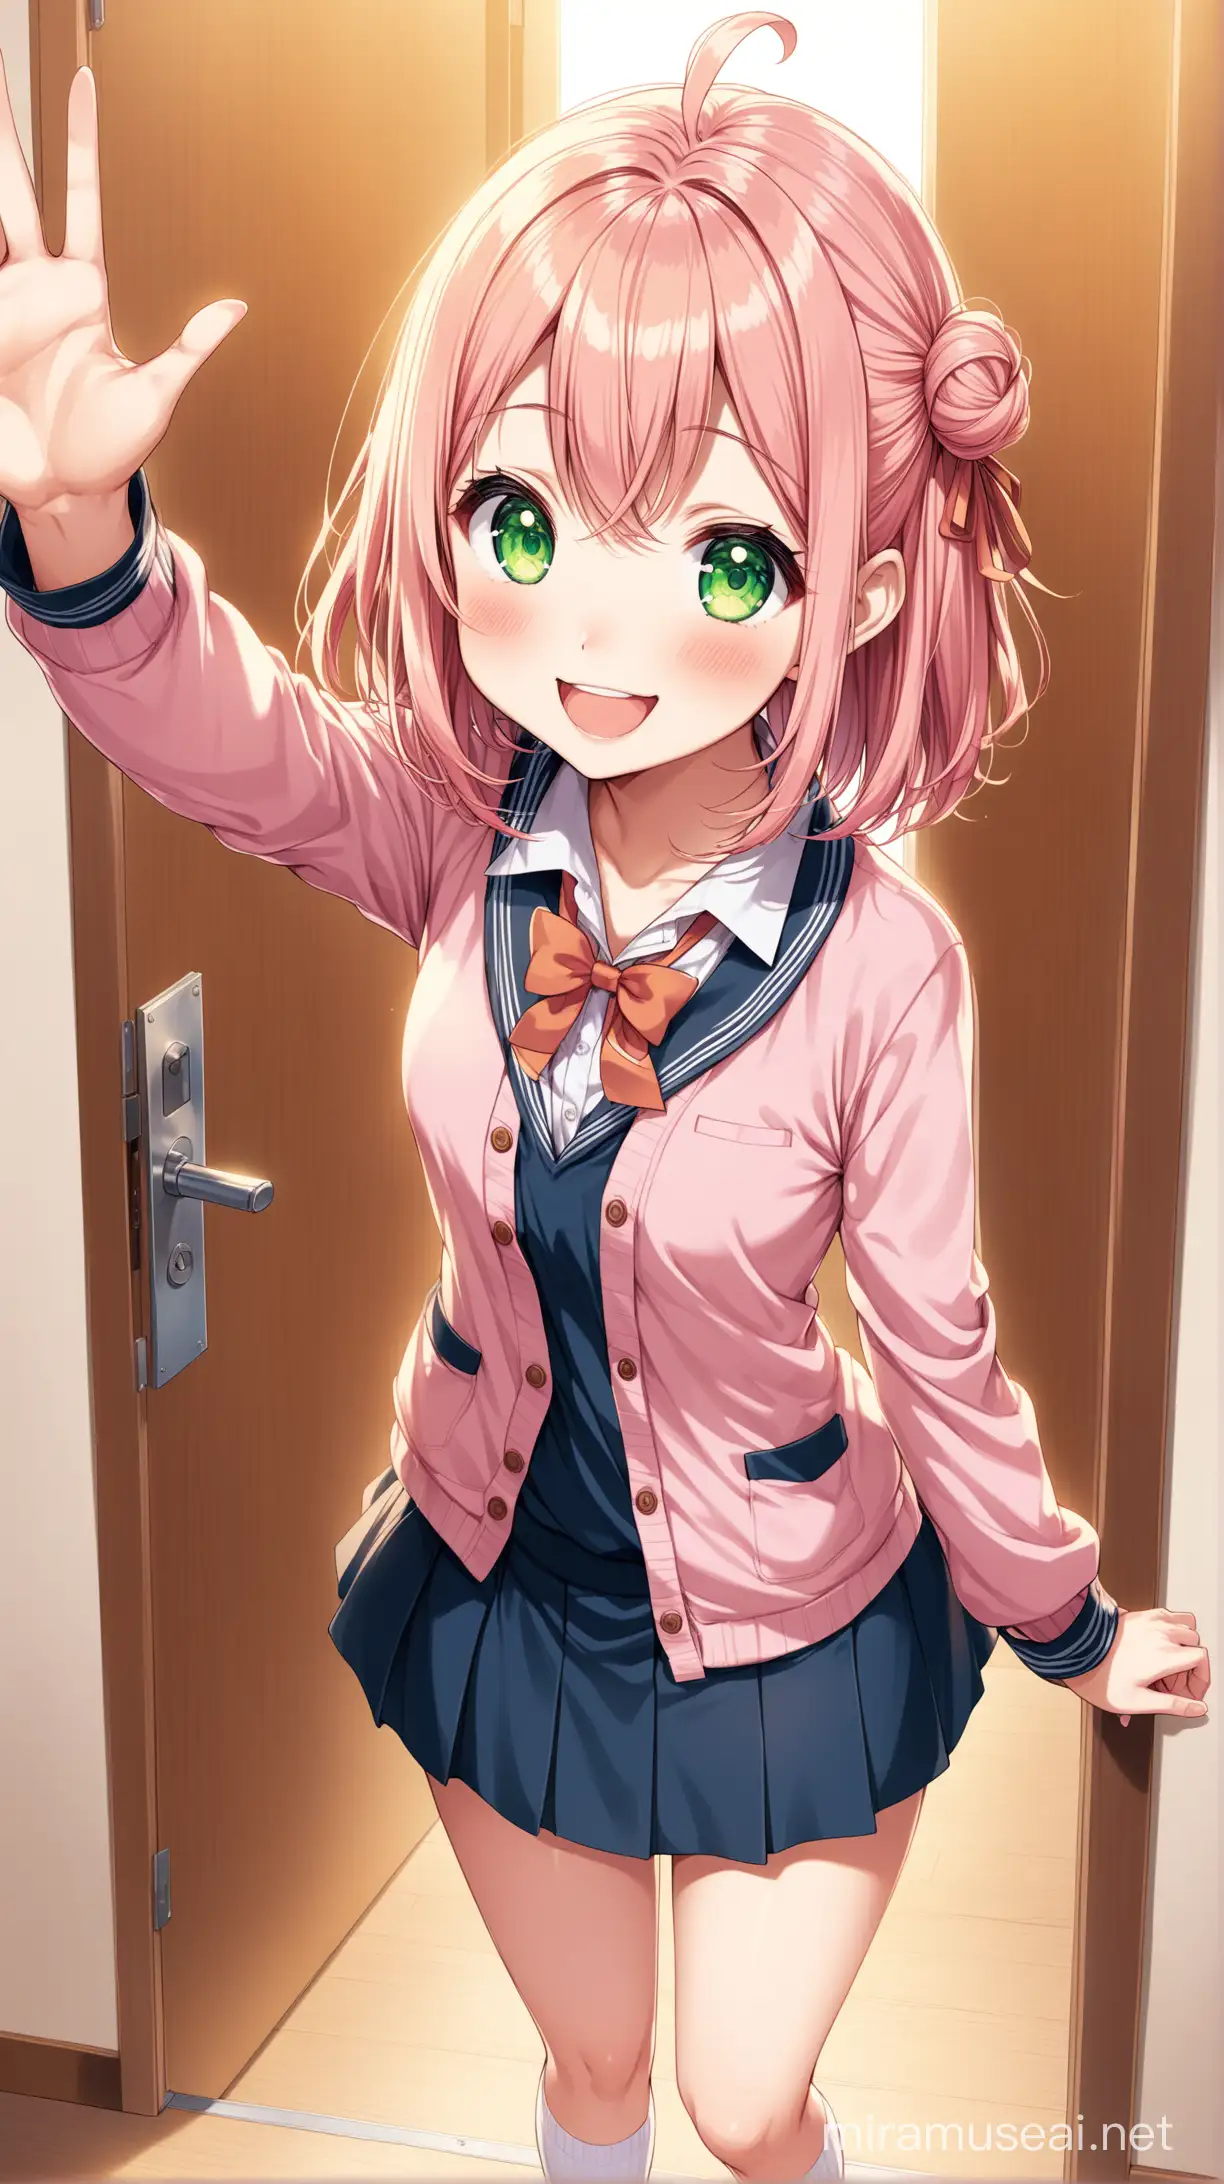 Anime School Girl Greeting with Energetic Wave